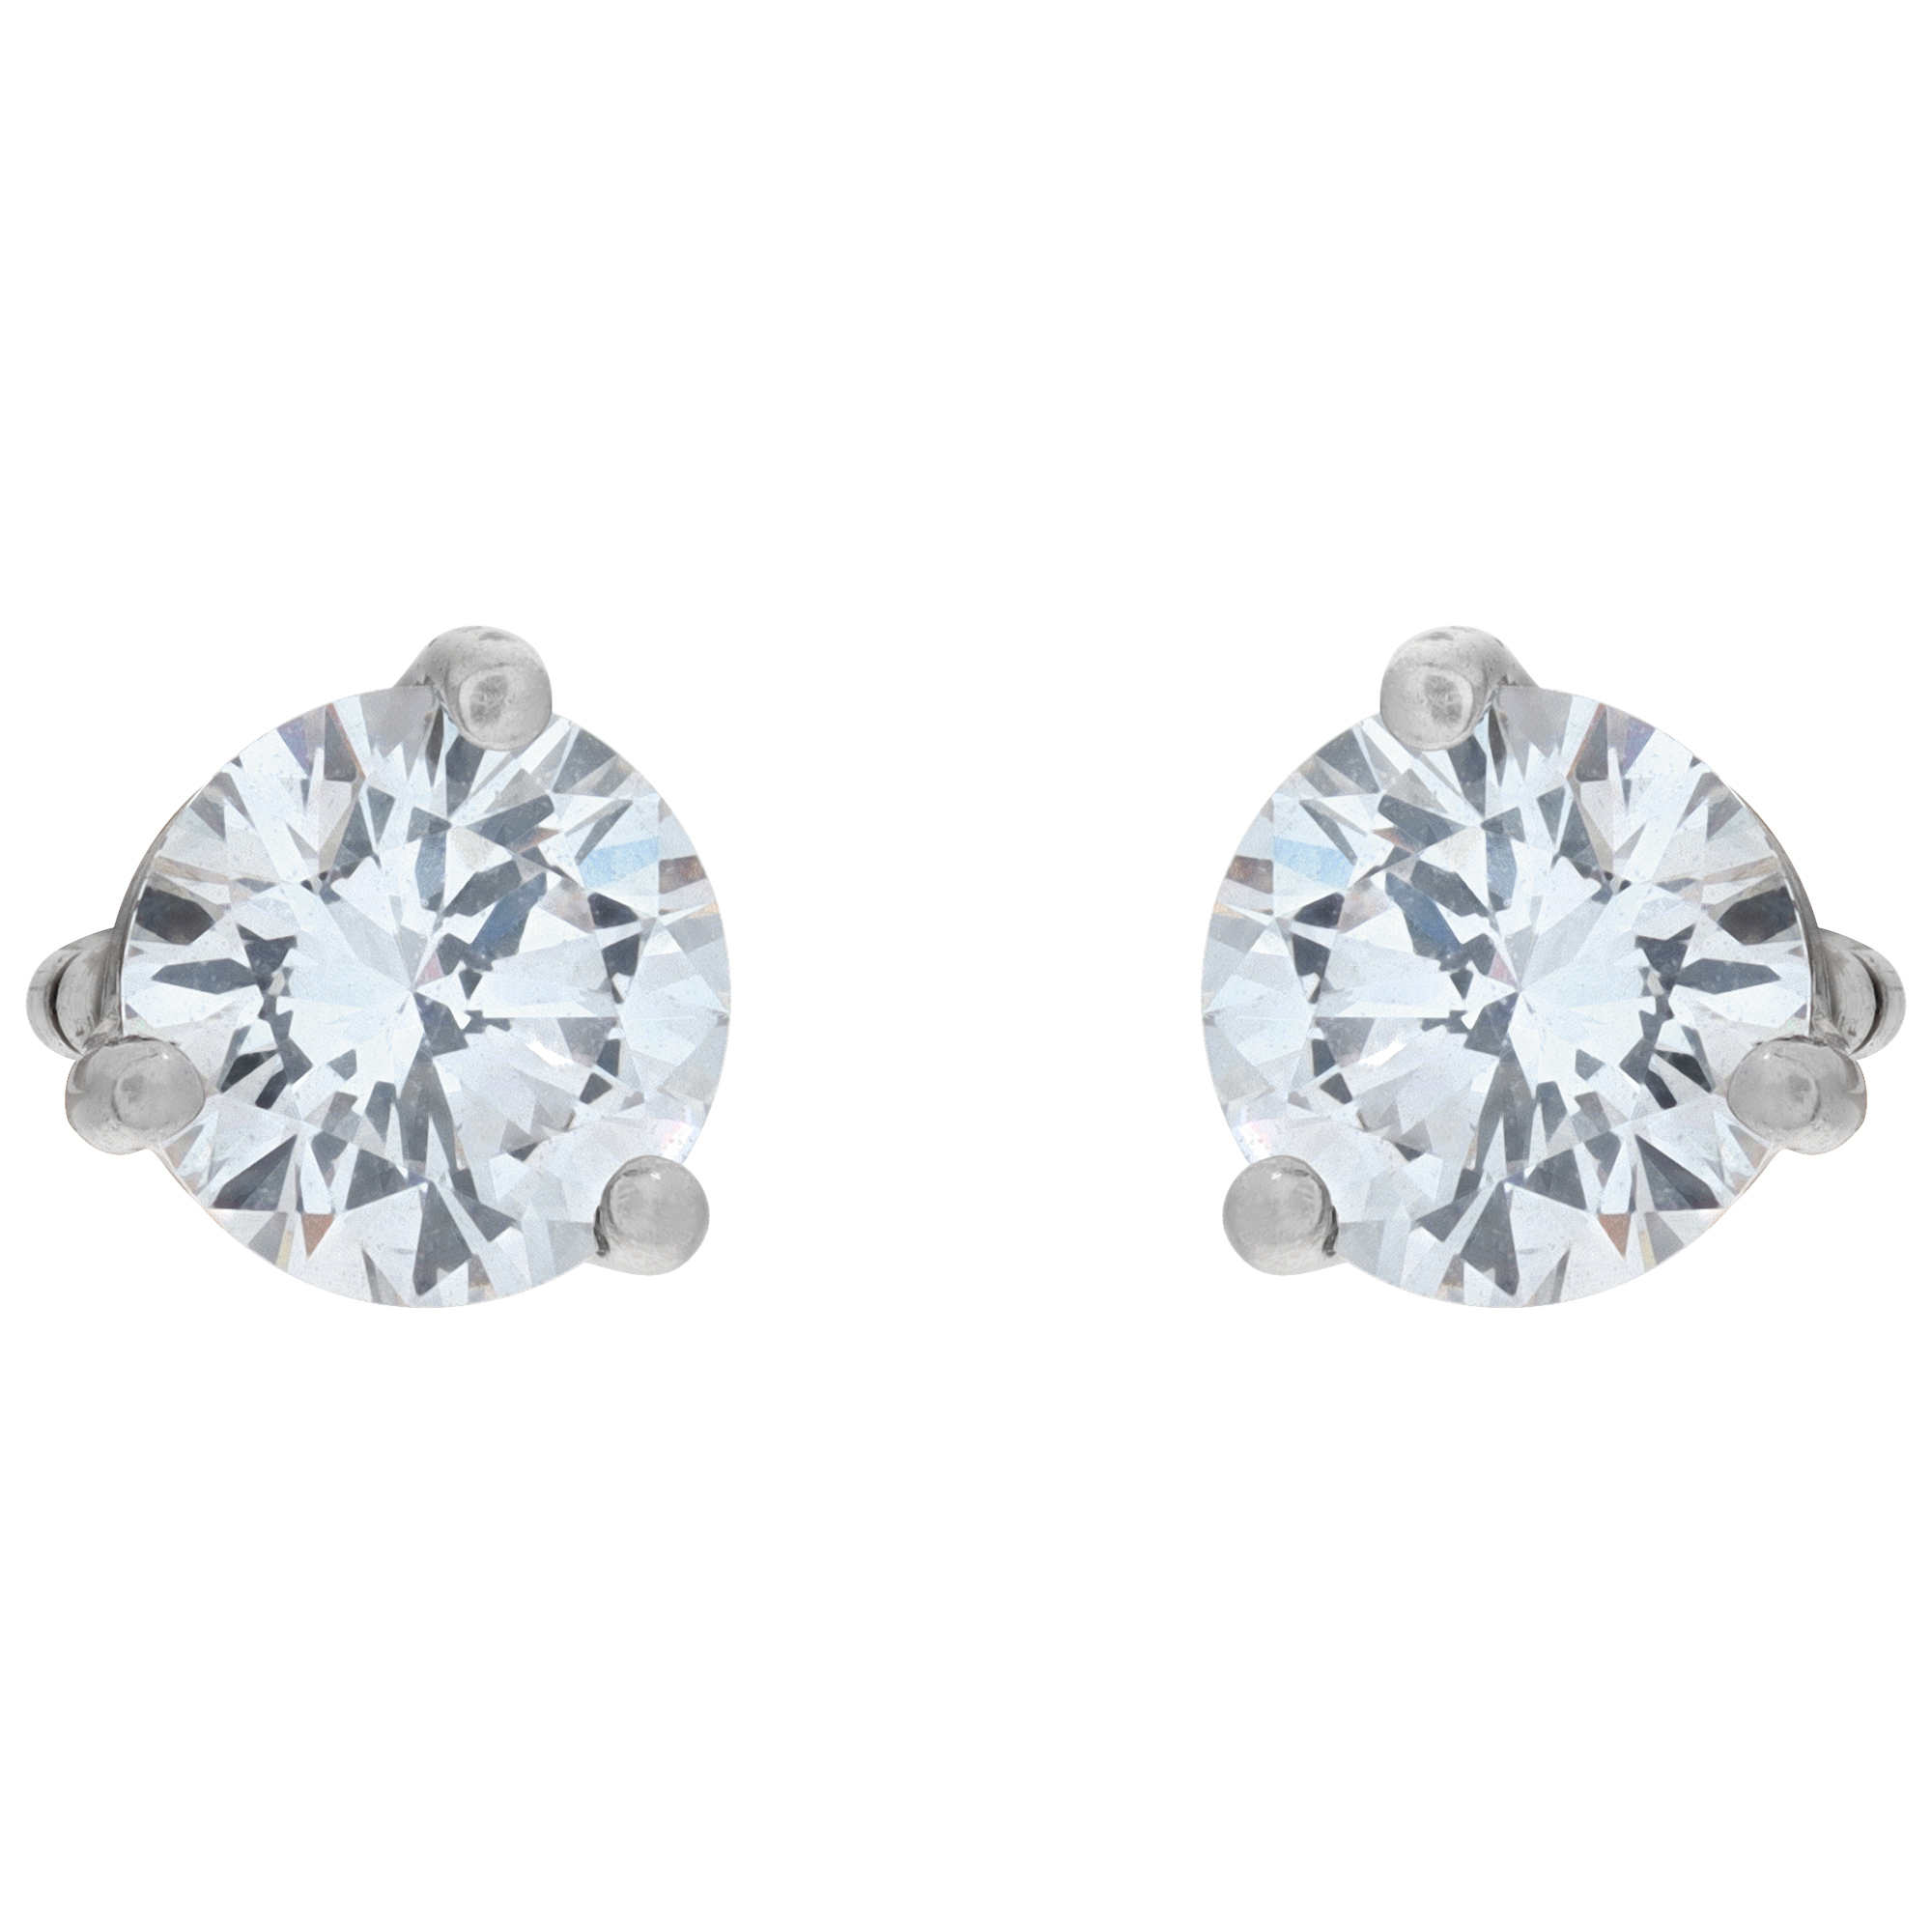 Round brilliant diamonds studs earrings in 18K white gold